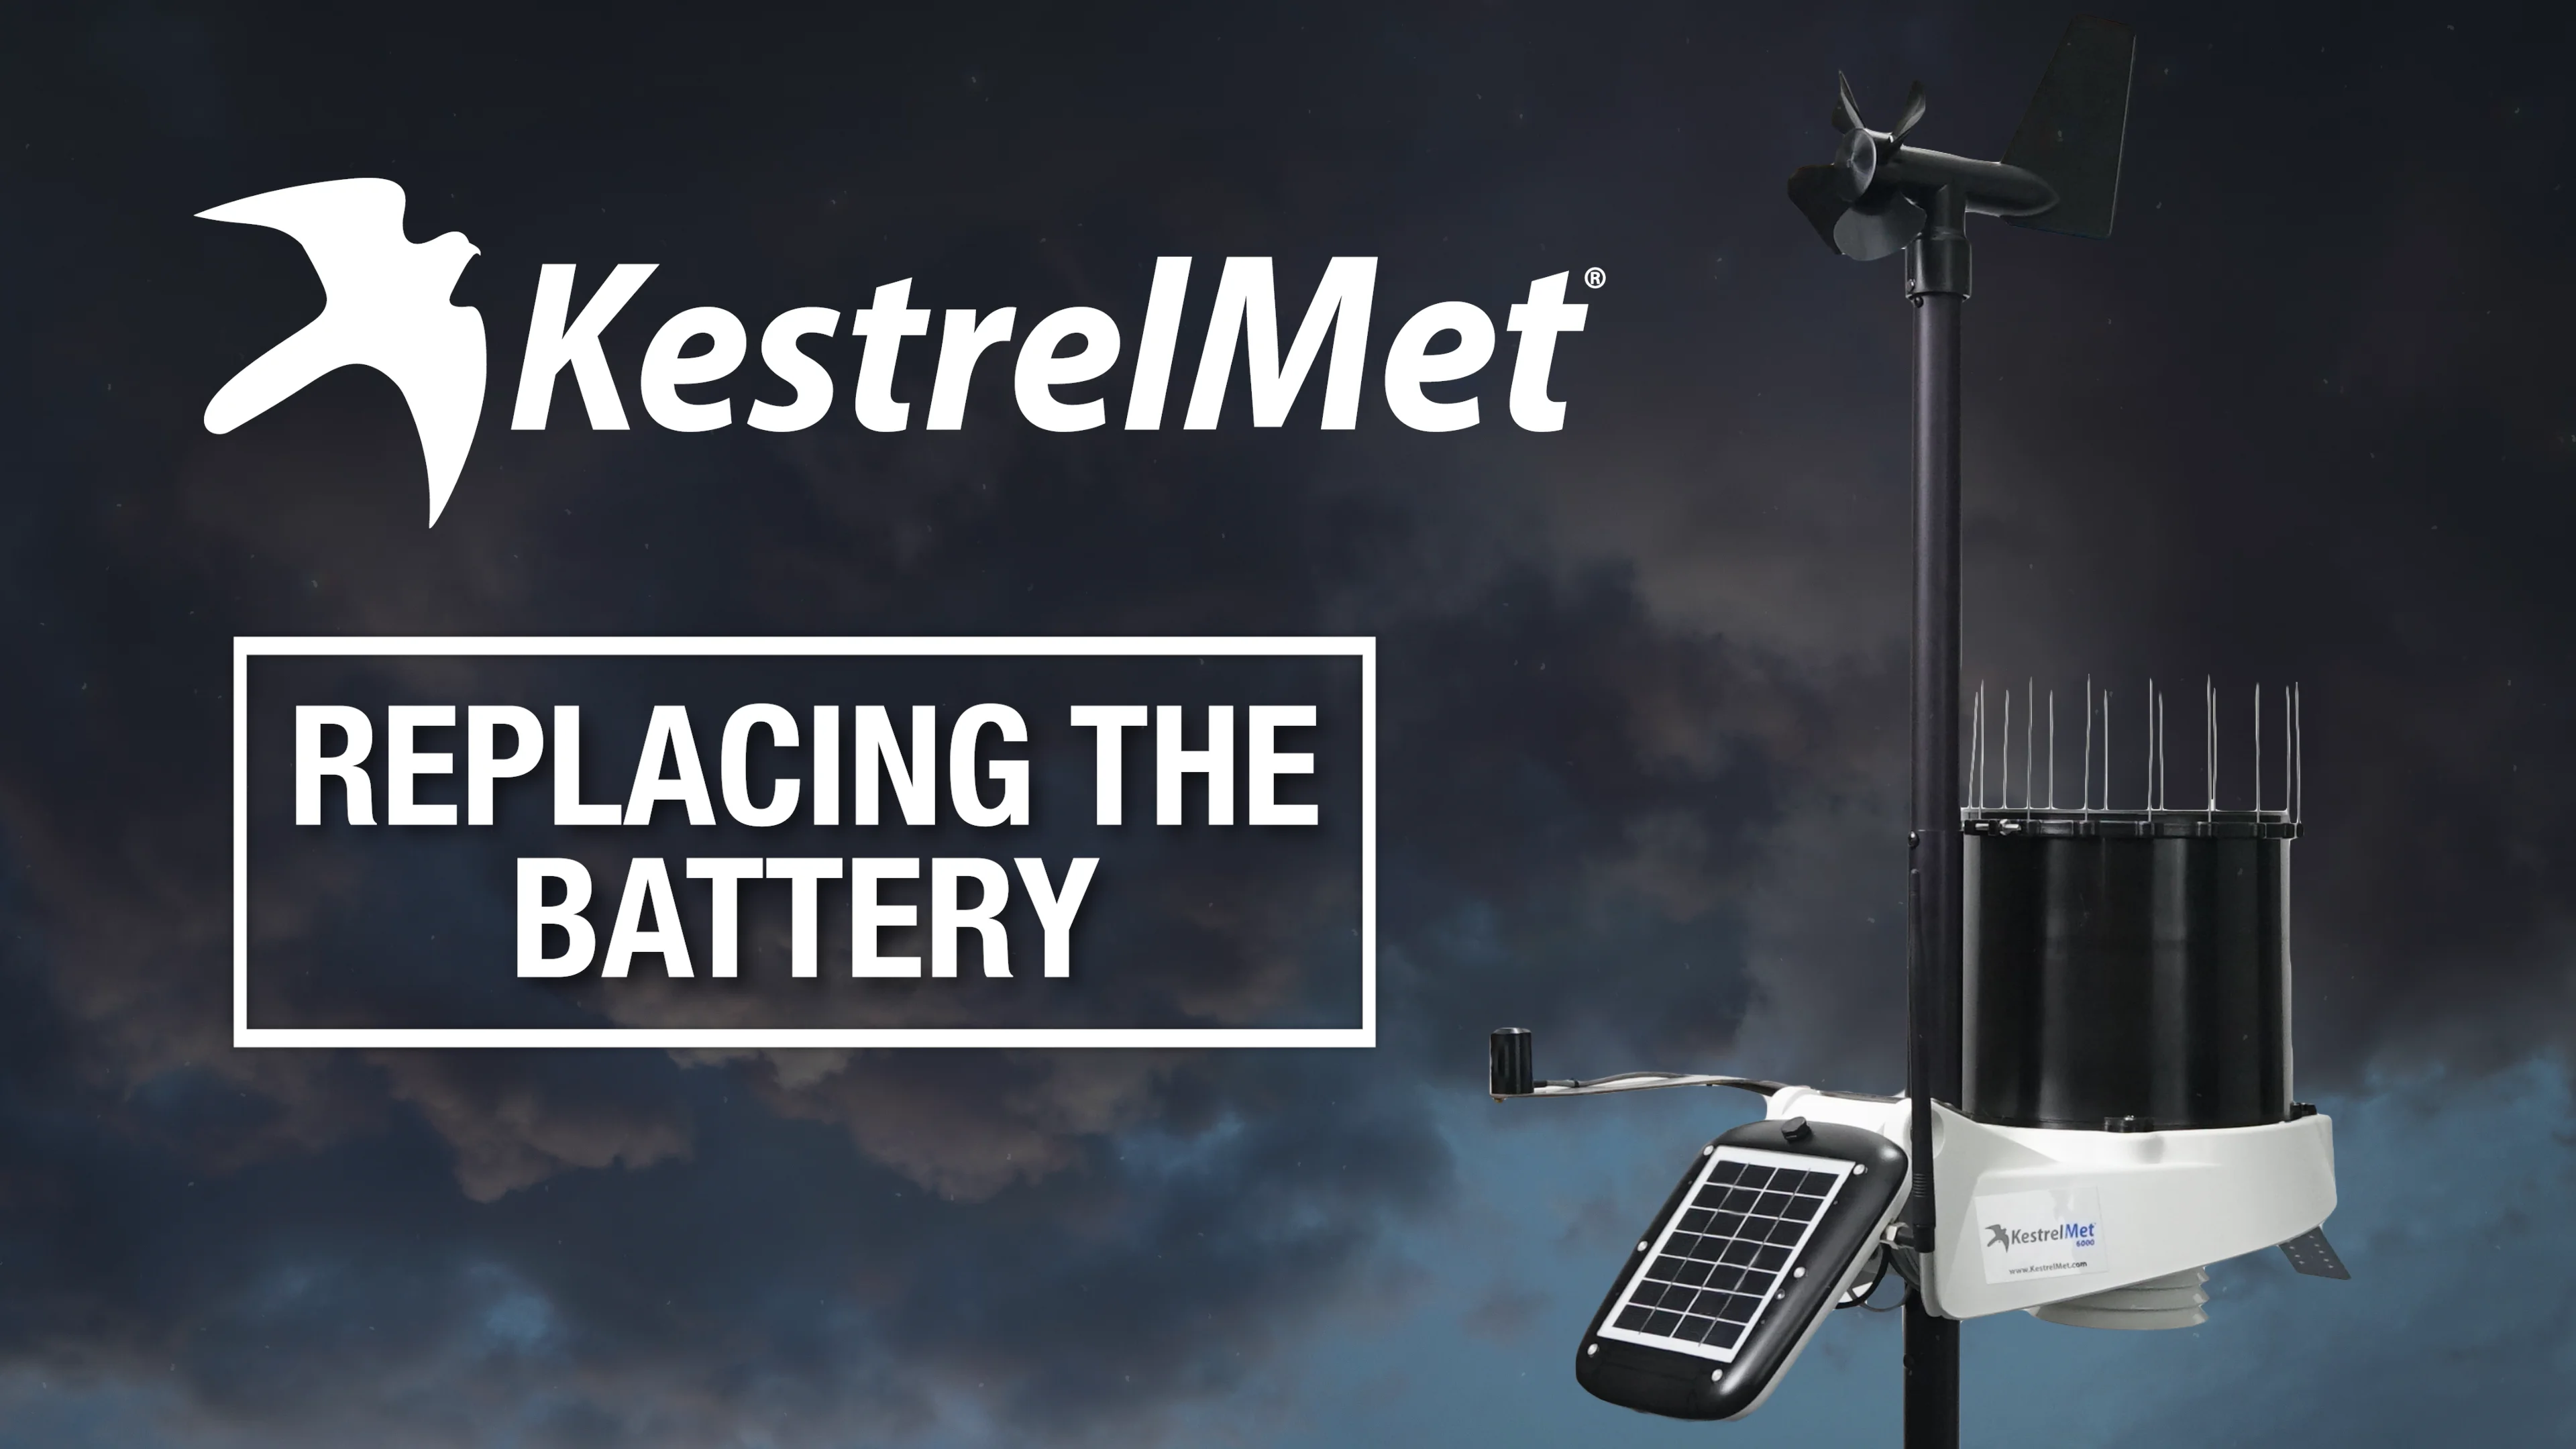 KestrelMet 6000 Cellular Weather Station